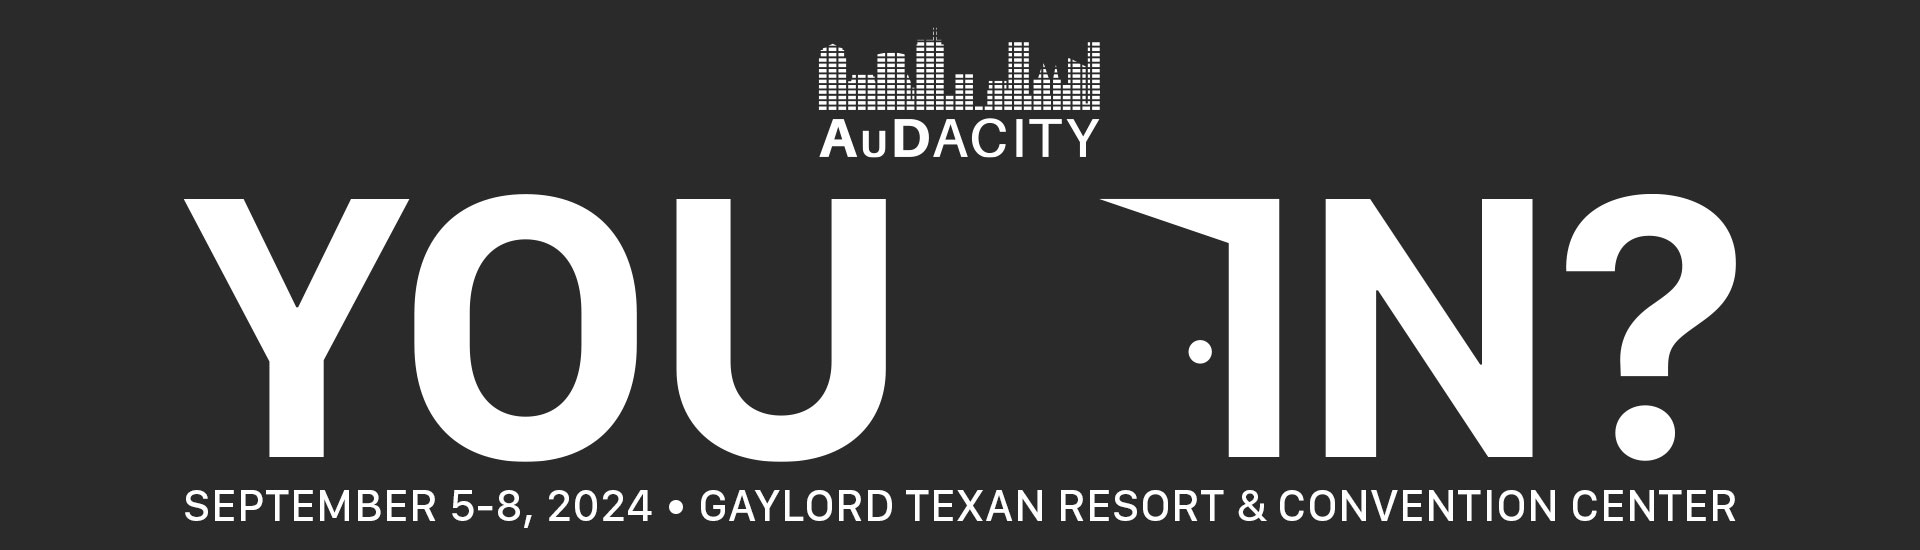 AuDacity 2024 • Gaylord Texan Resort, Texas • September 5-8, 2024